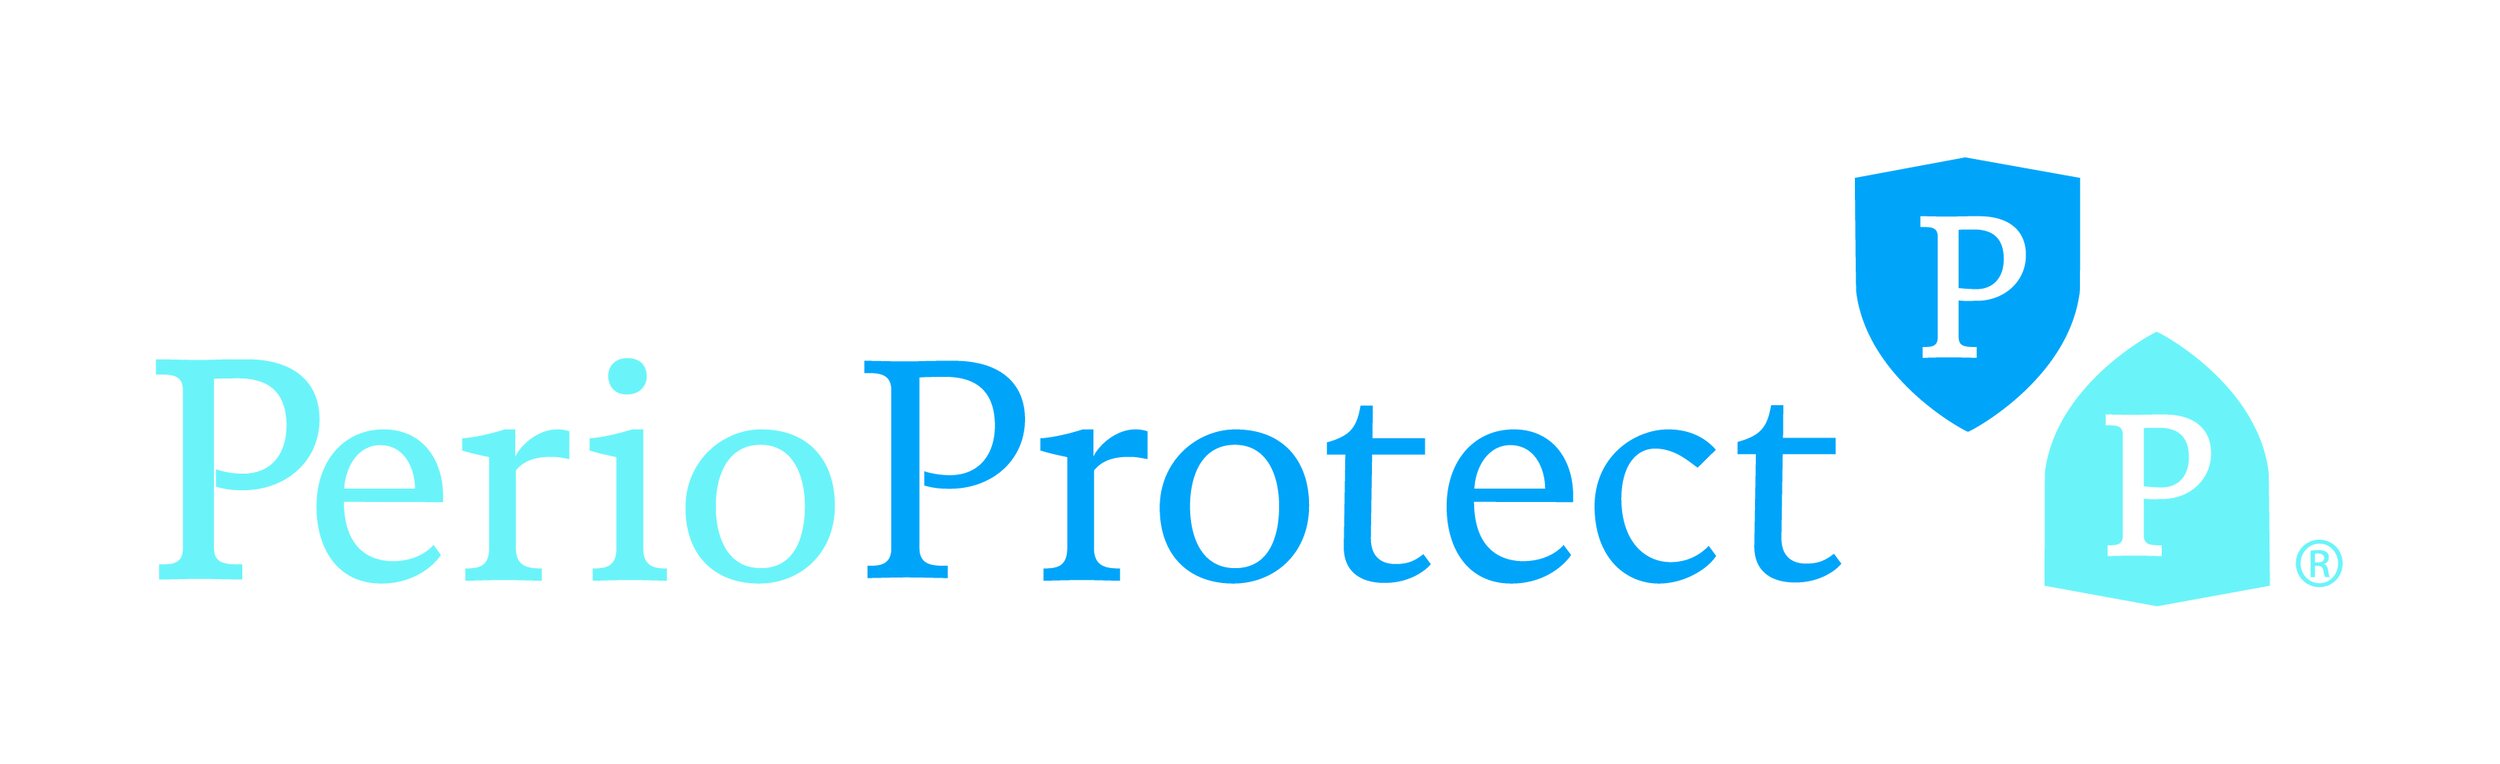 Perio-Protect-Logo-2C.jpg